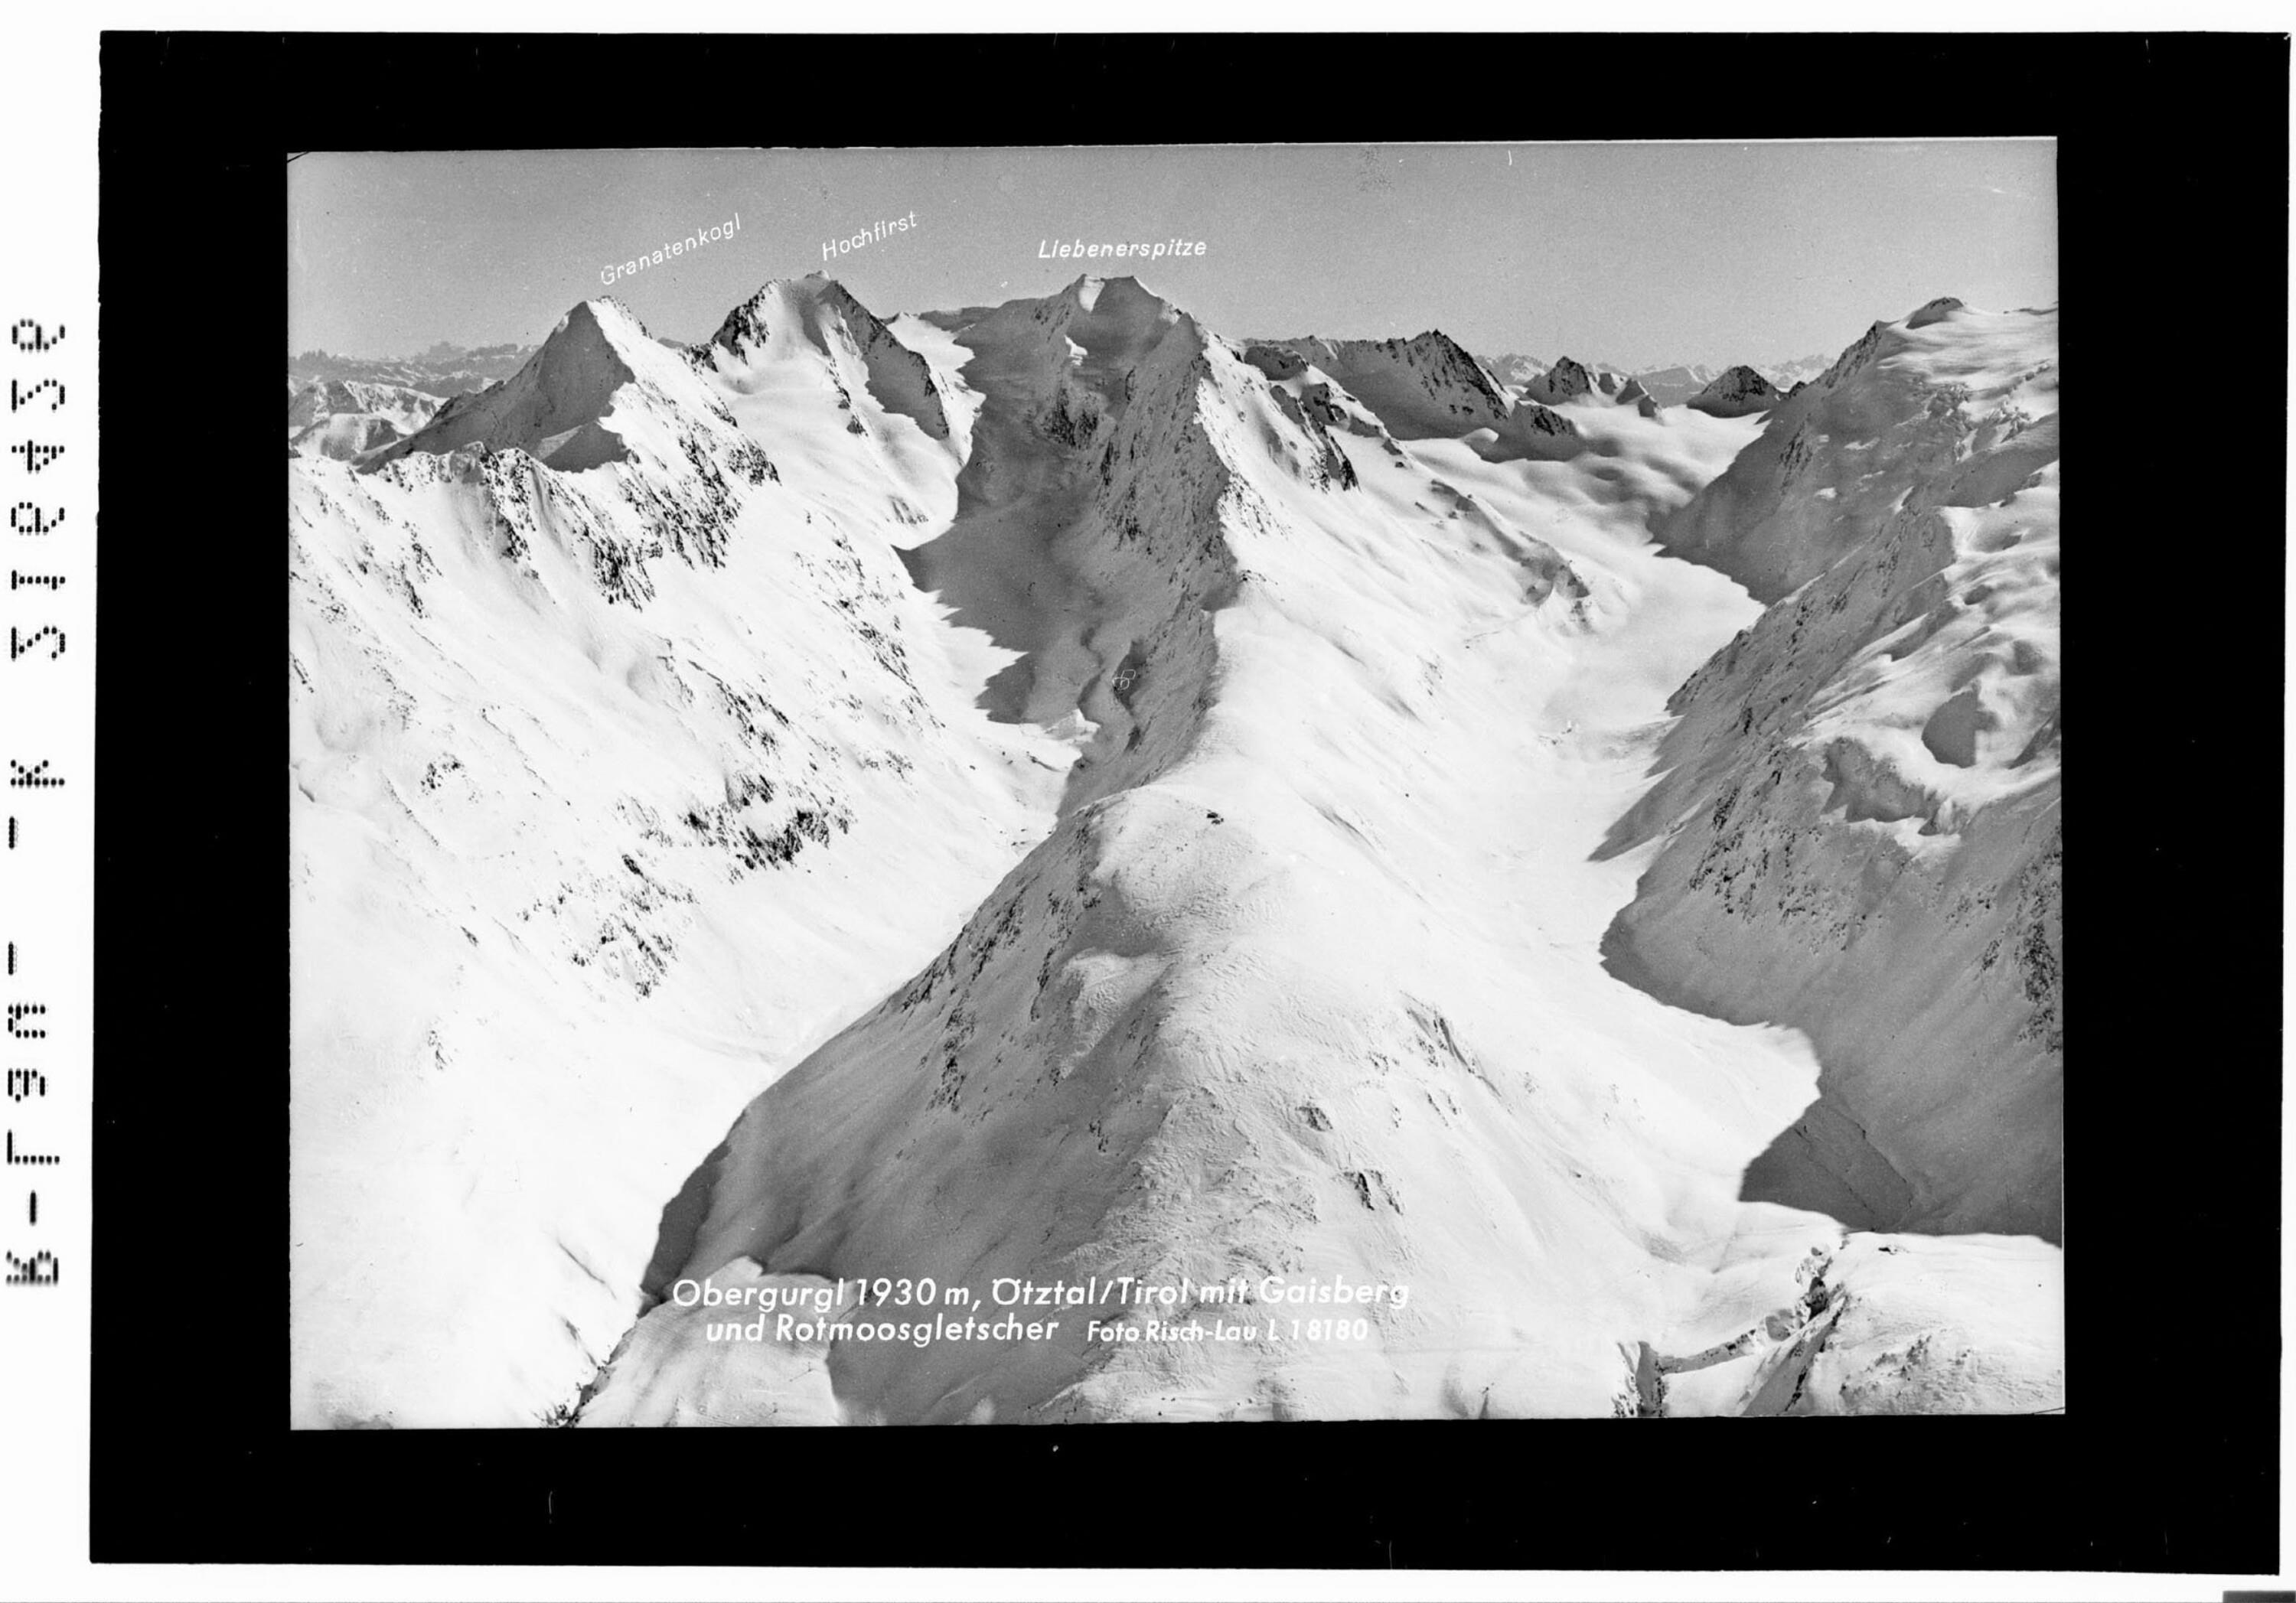 Obergurgl 1930 m, Ötztal Tirol mit Gaisberg und Rotmoosgletscher></div>


    <hr>
    <div class=